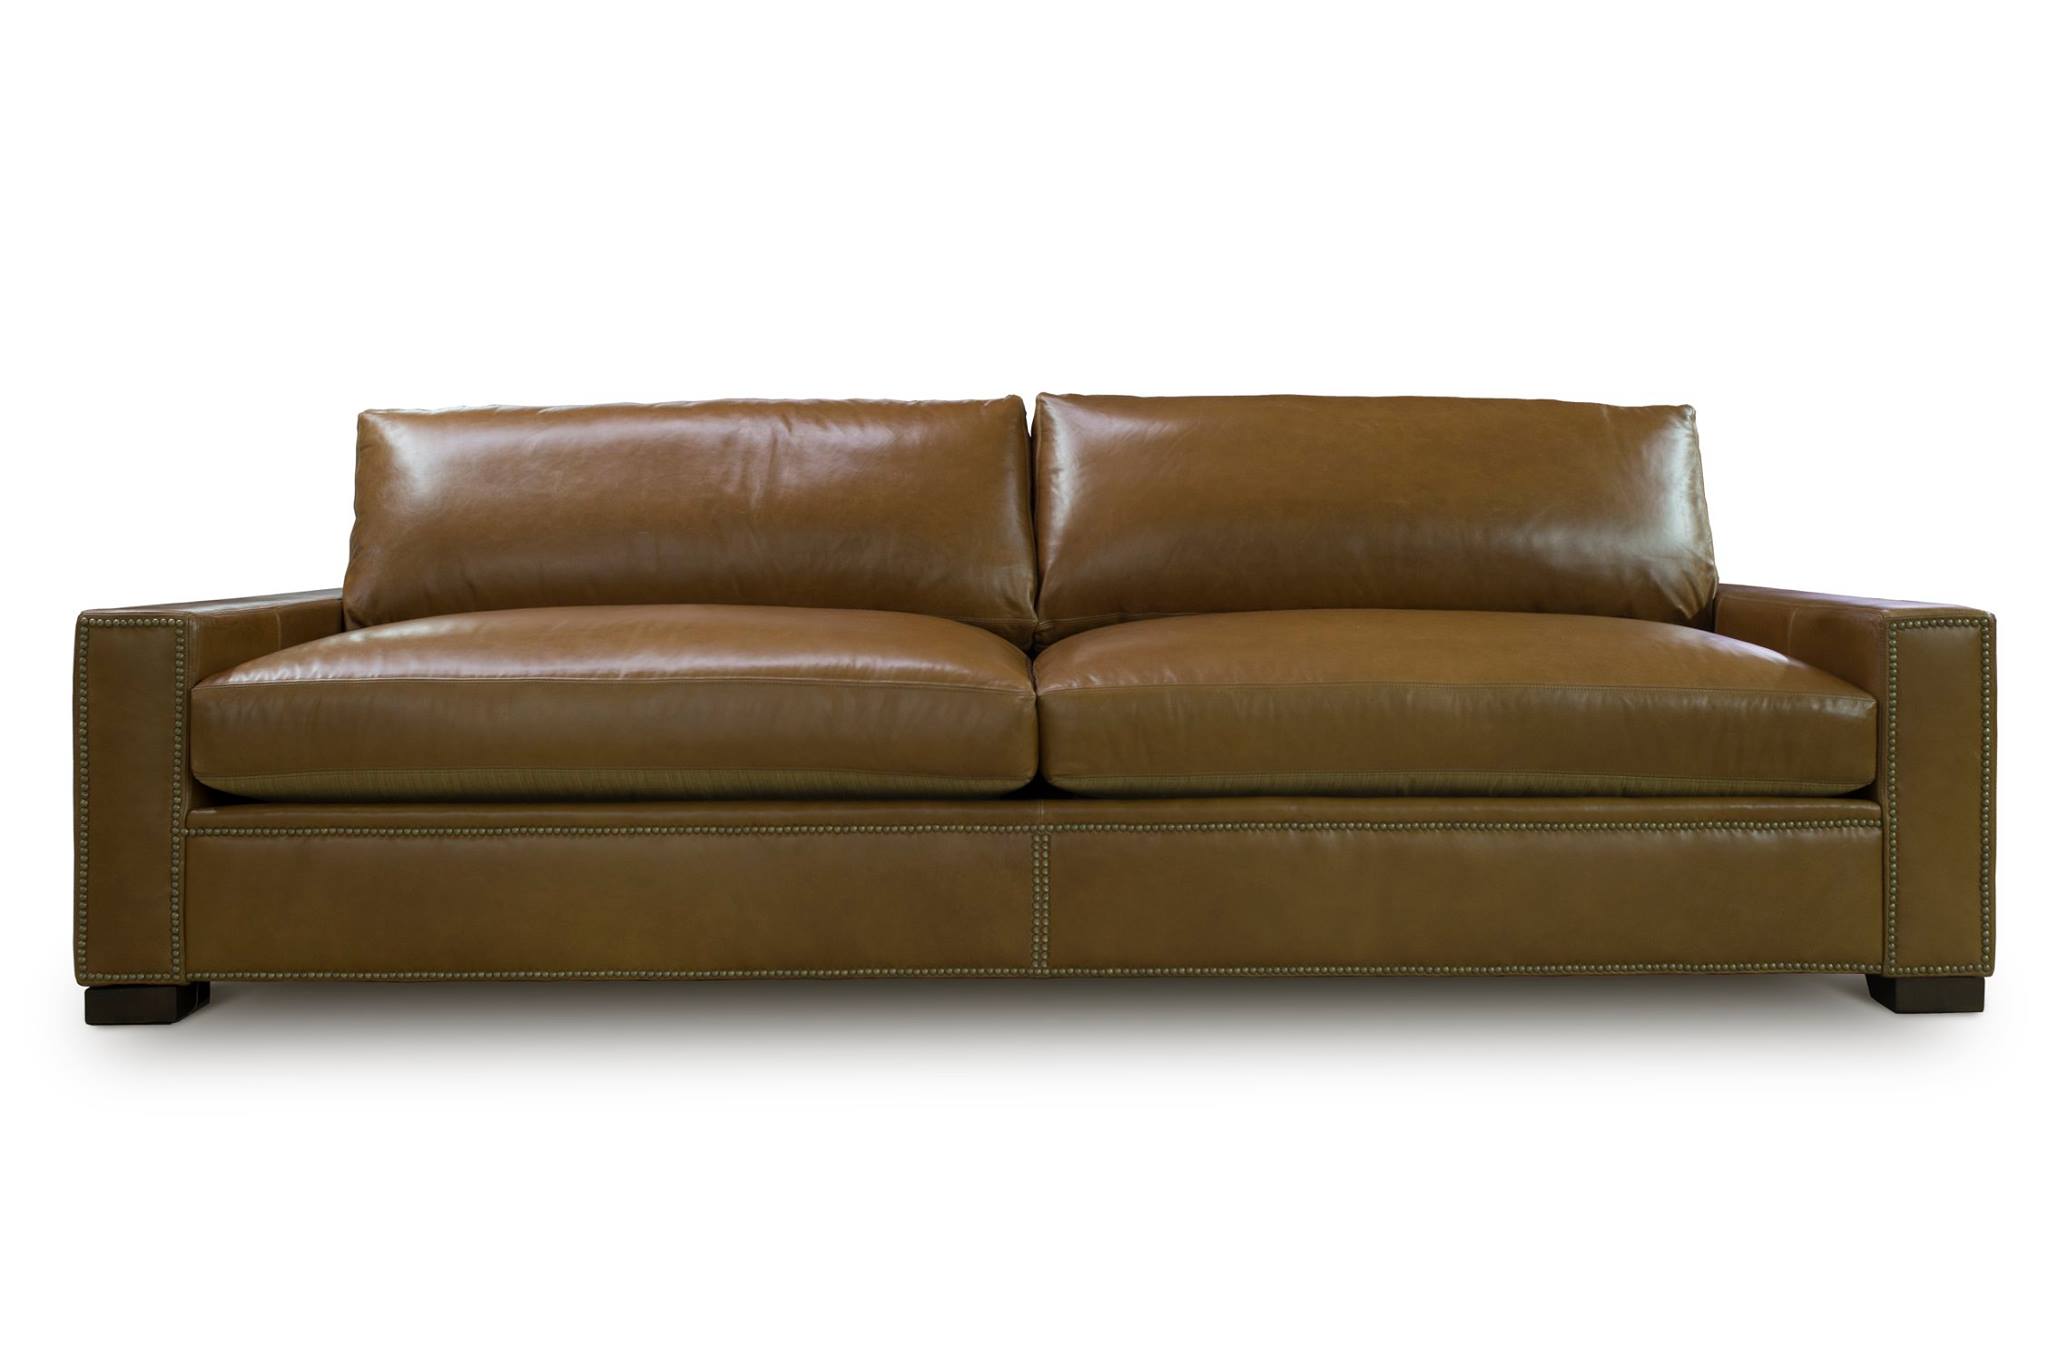 McQueen Caramel Leather Contemporary Square Track Arm Sofa